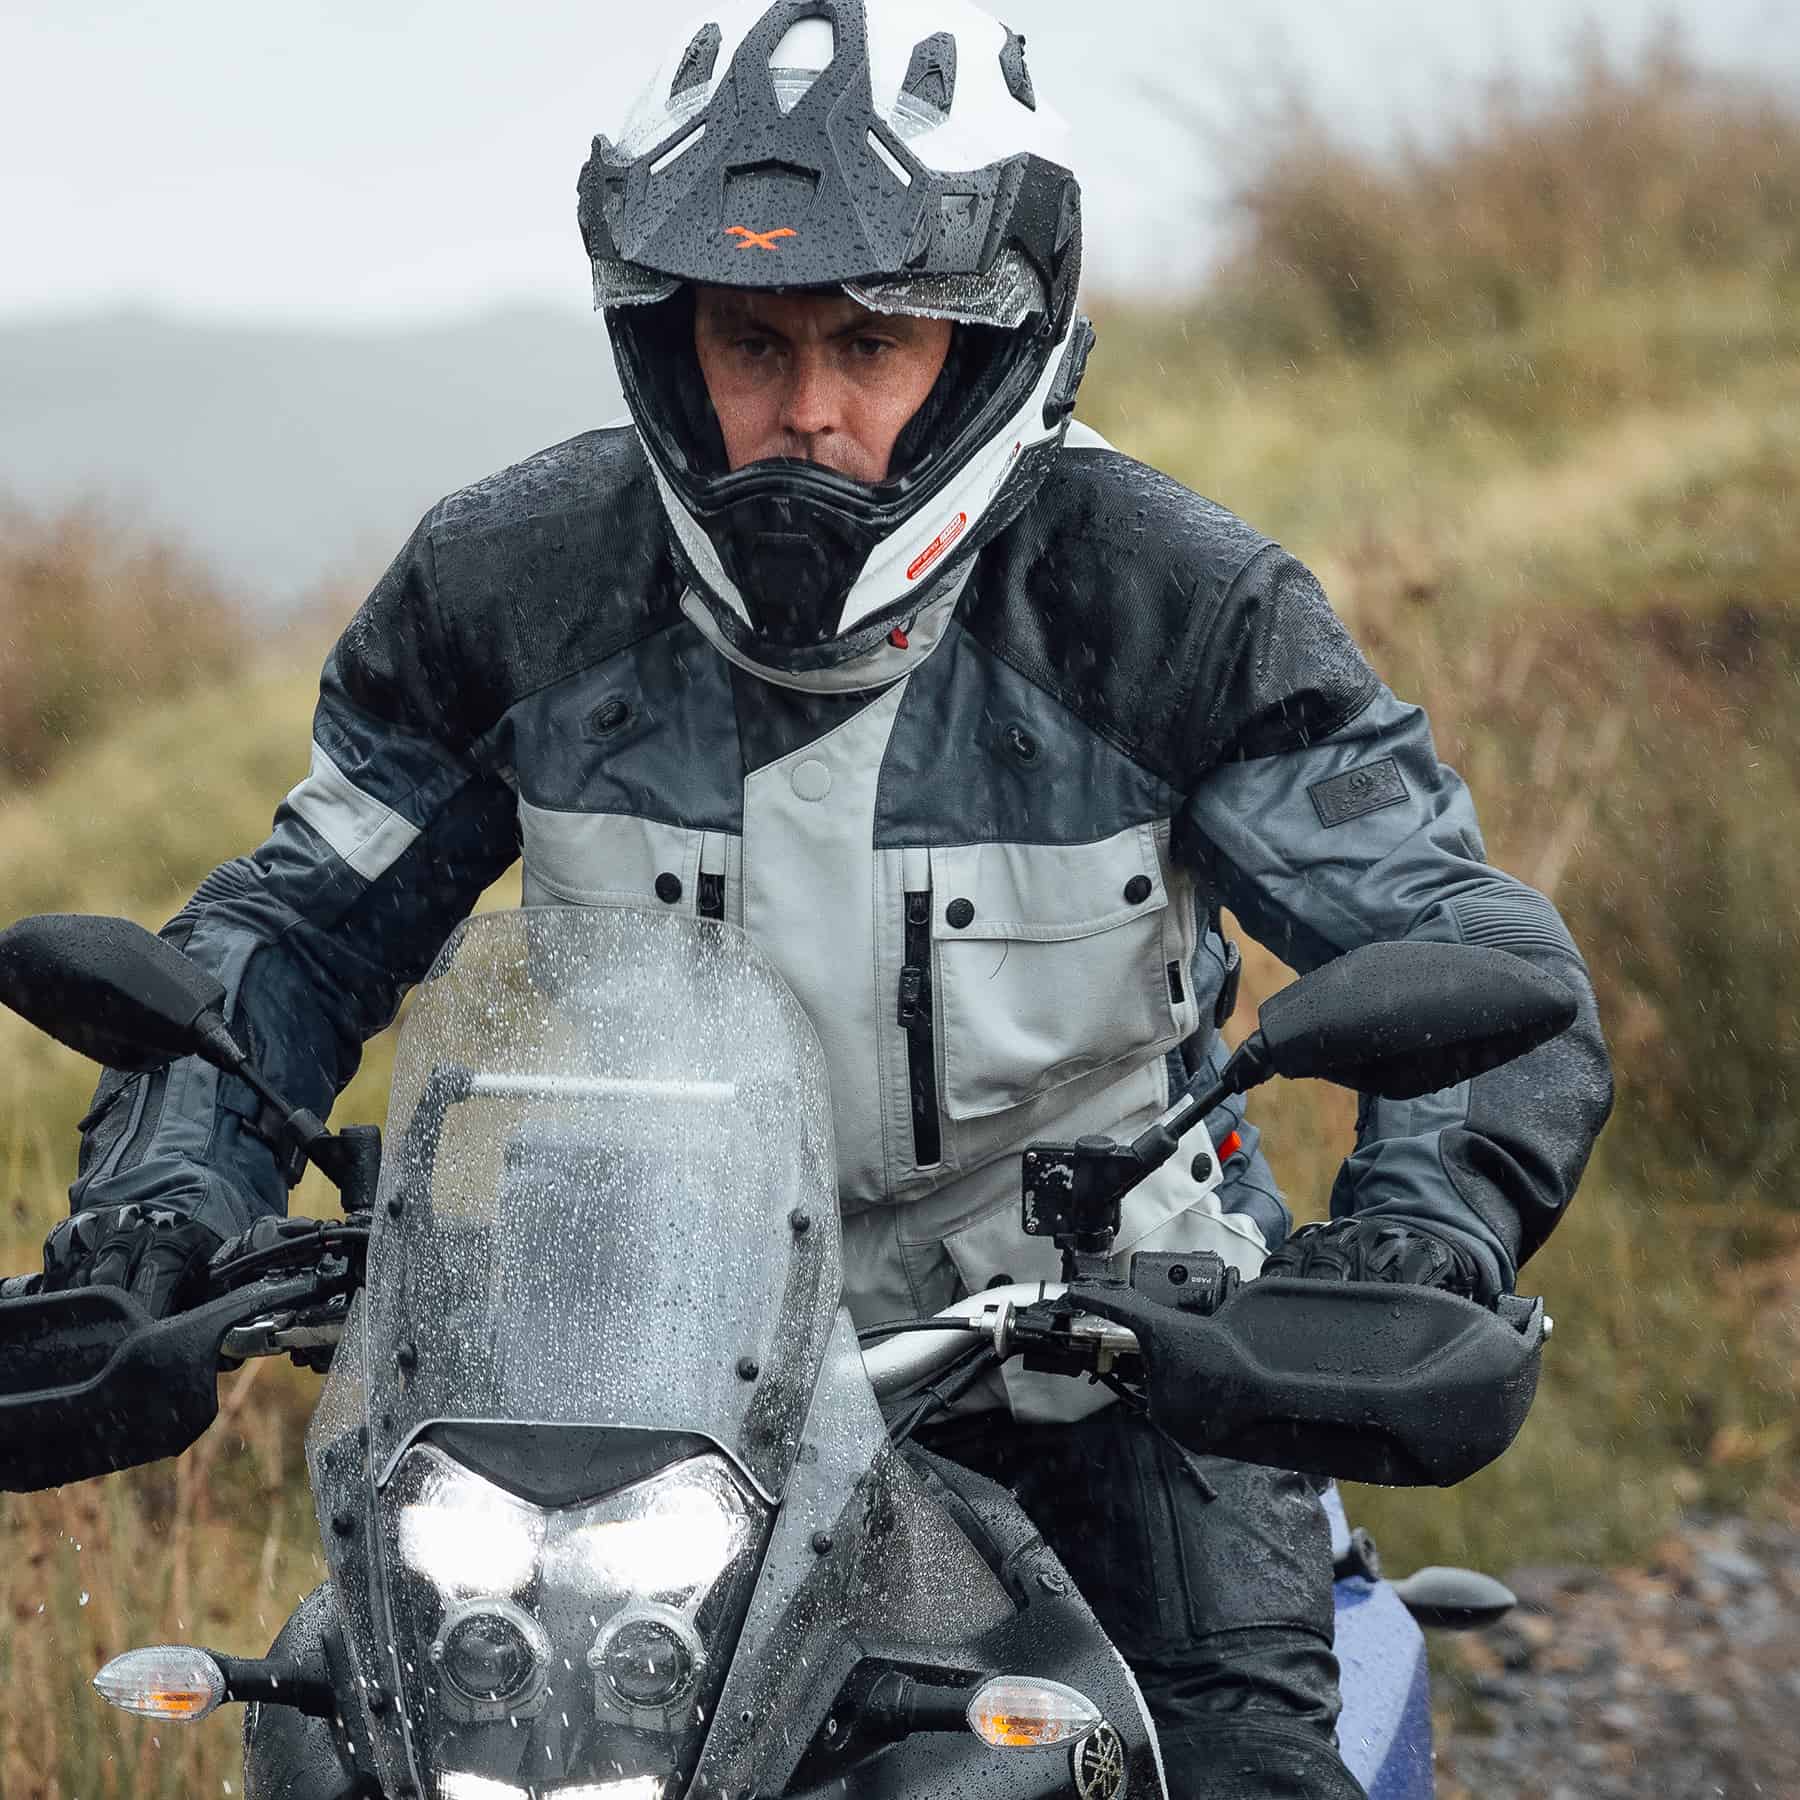 Merlin Solitude Motorcycle Jacket in Ice